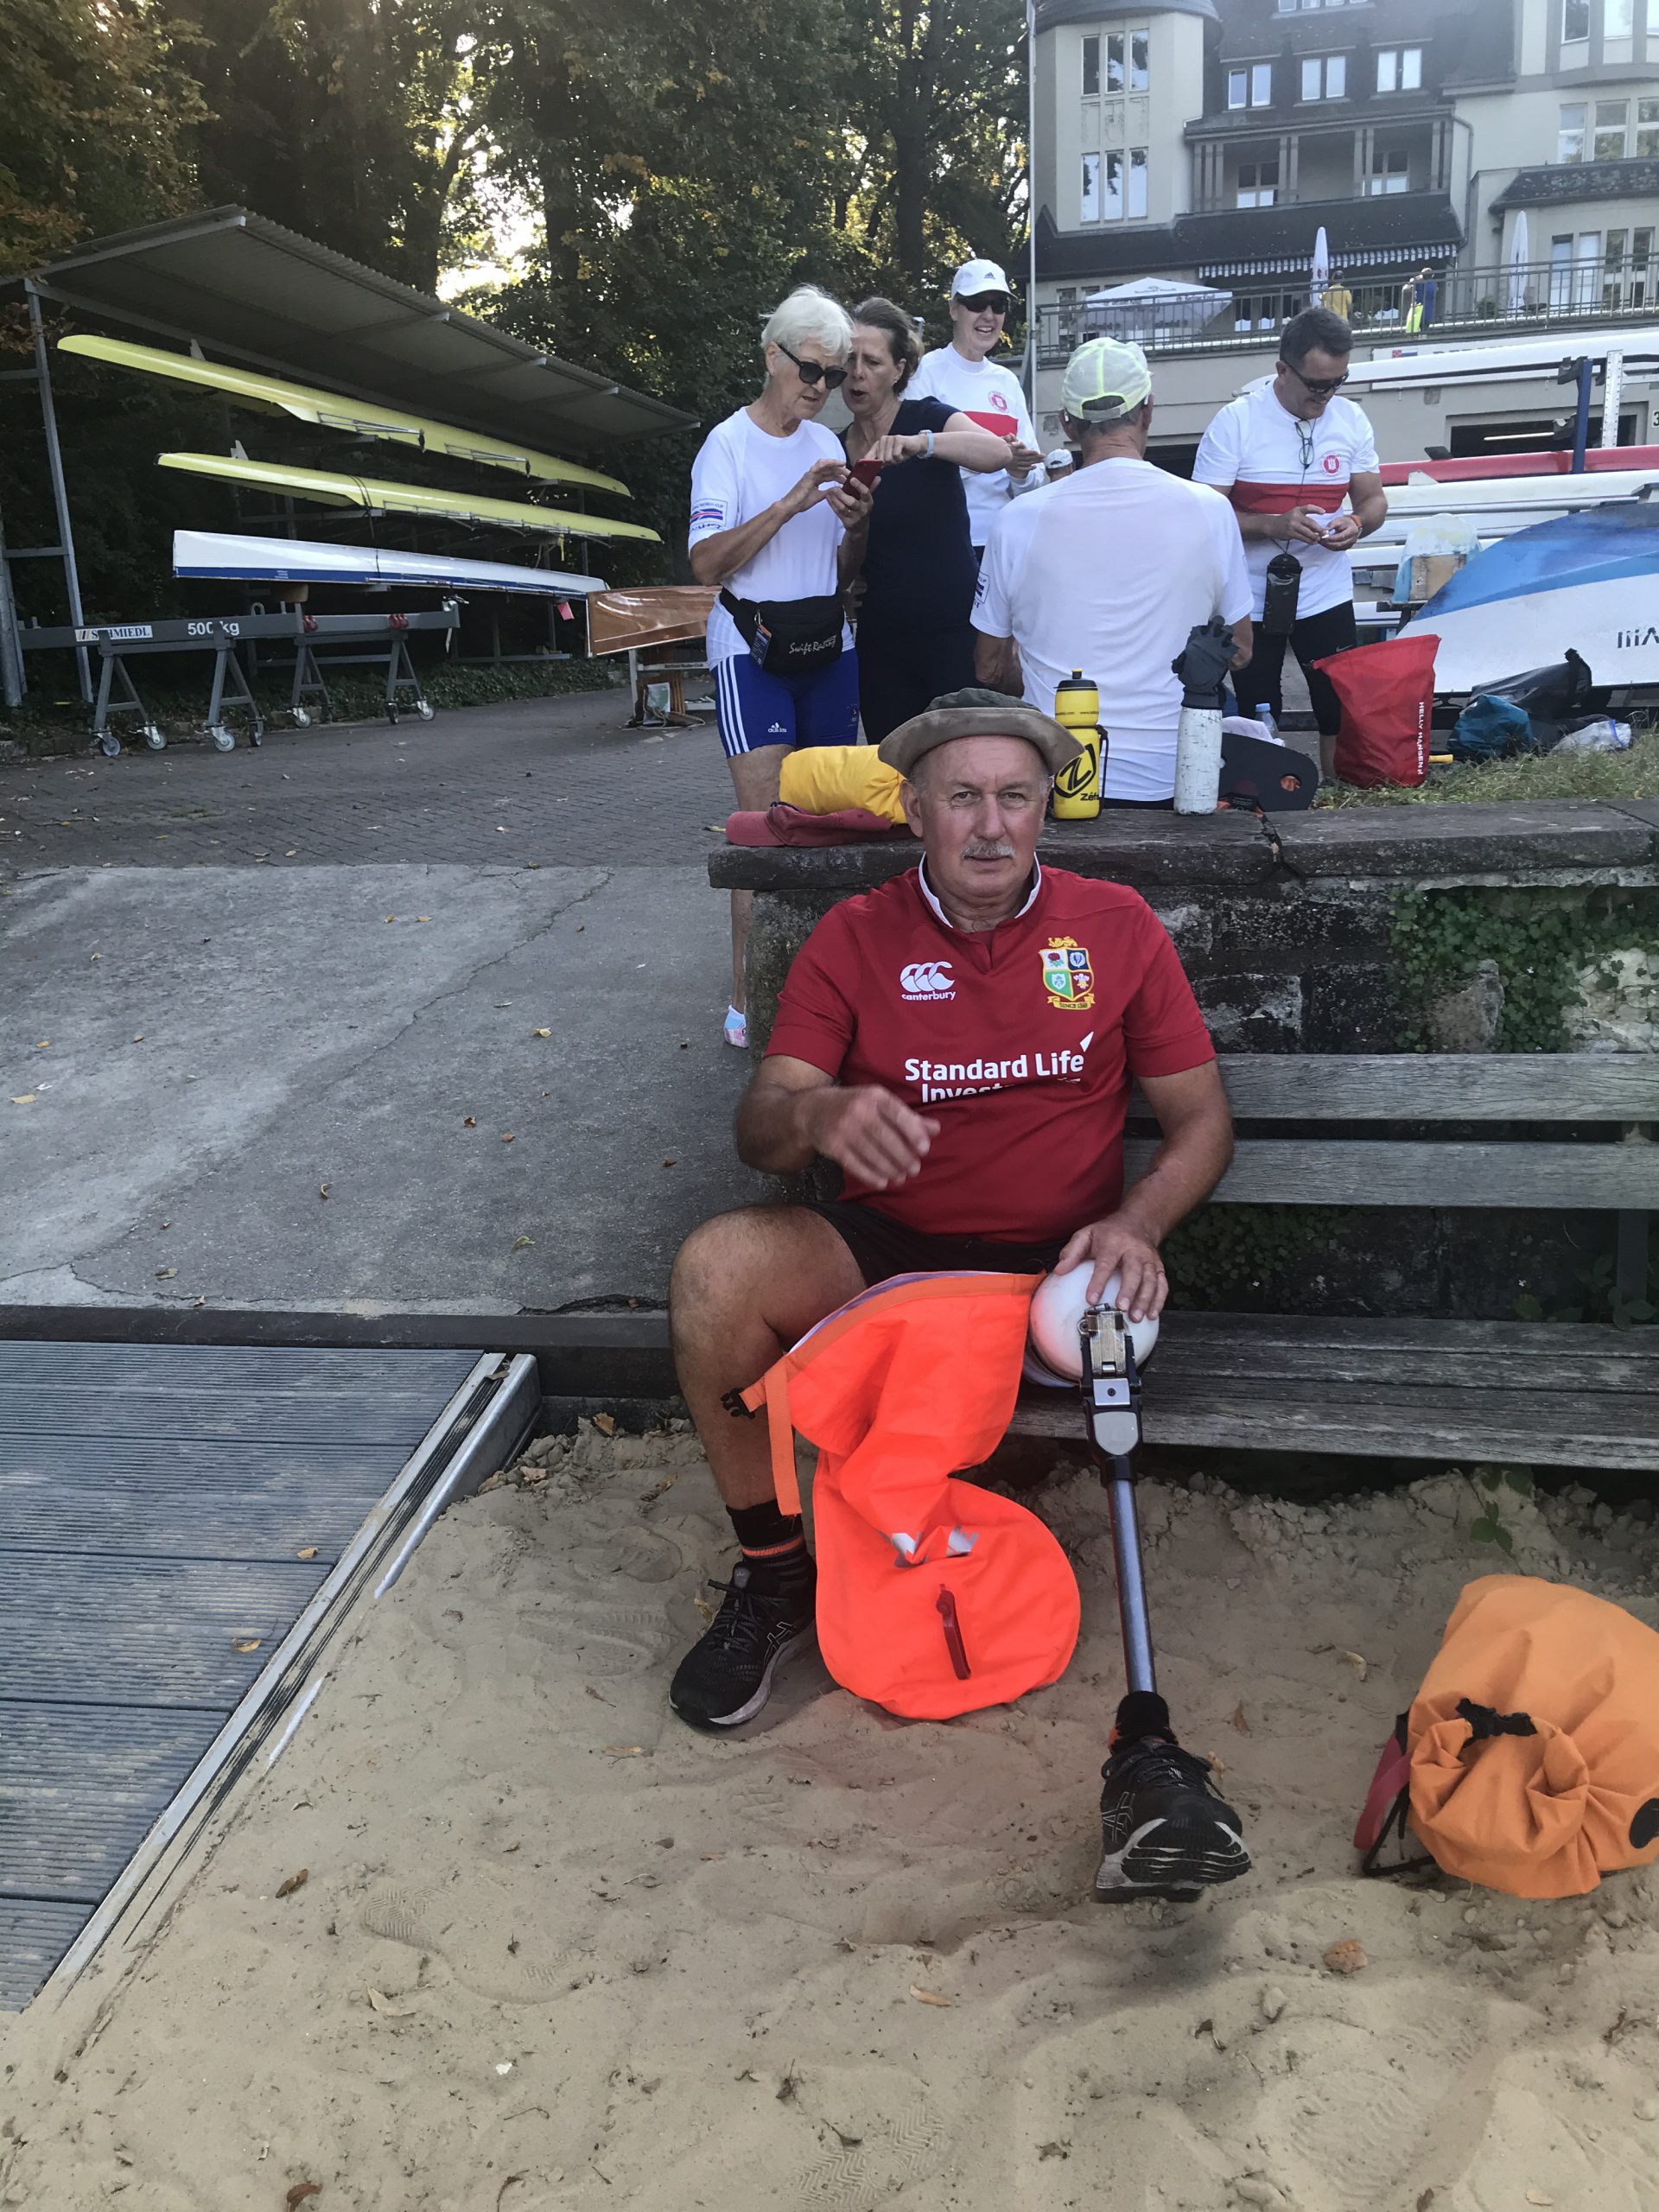 Malcolm Hingle, Recreational Rowing